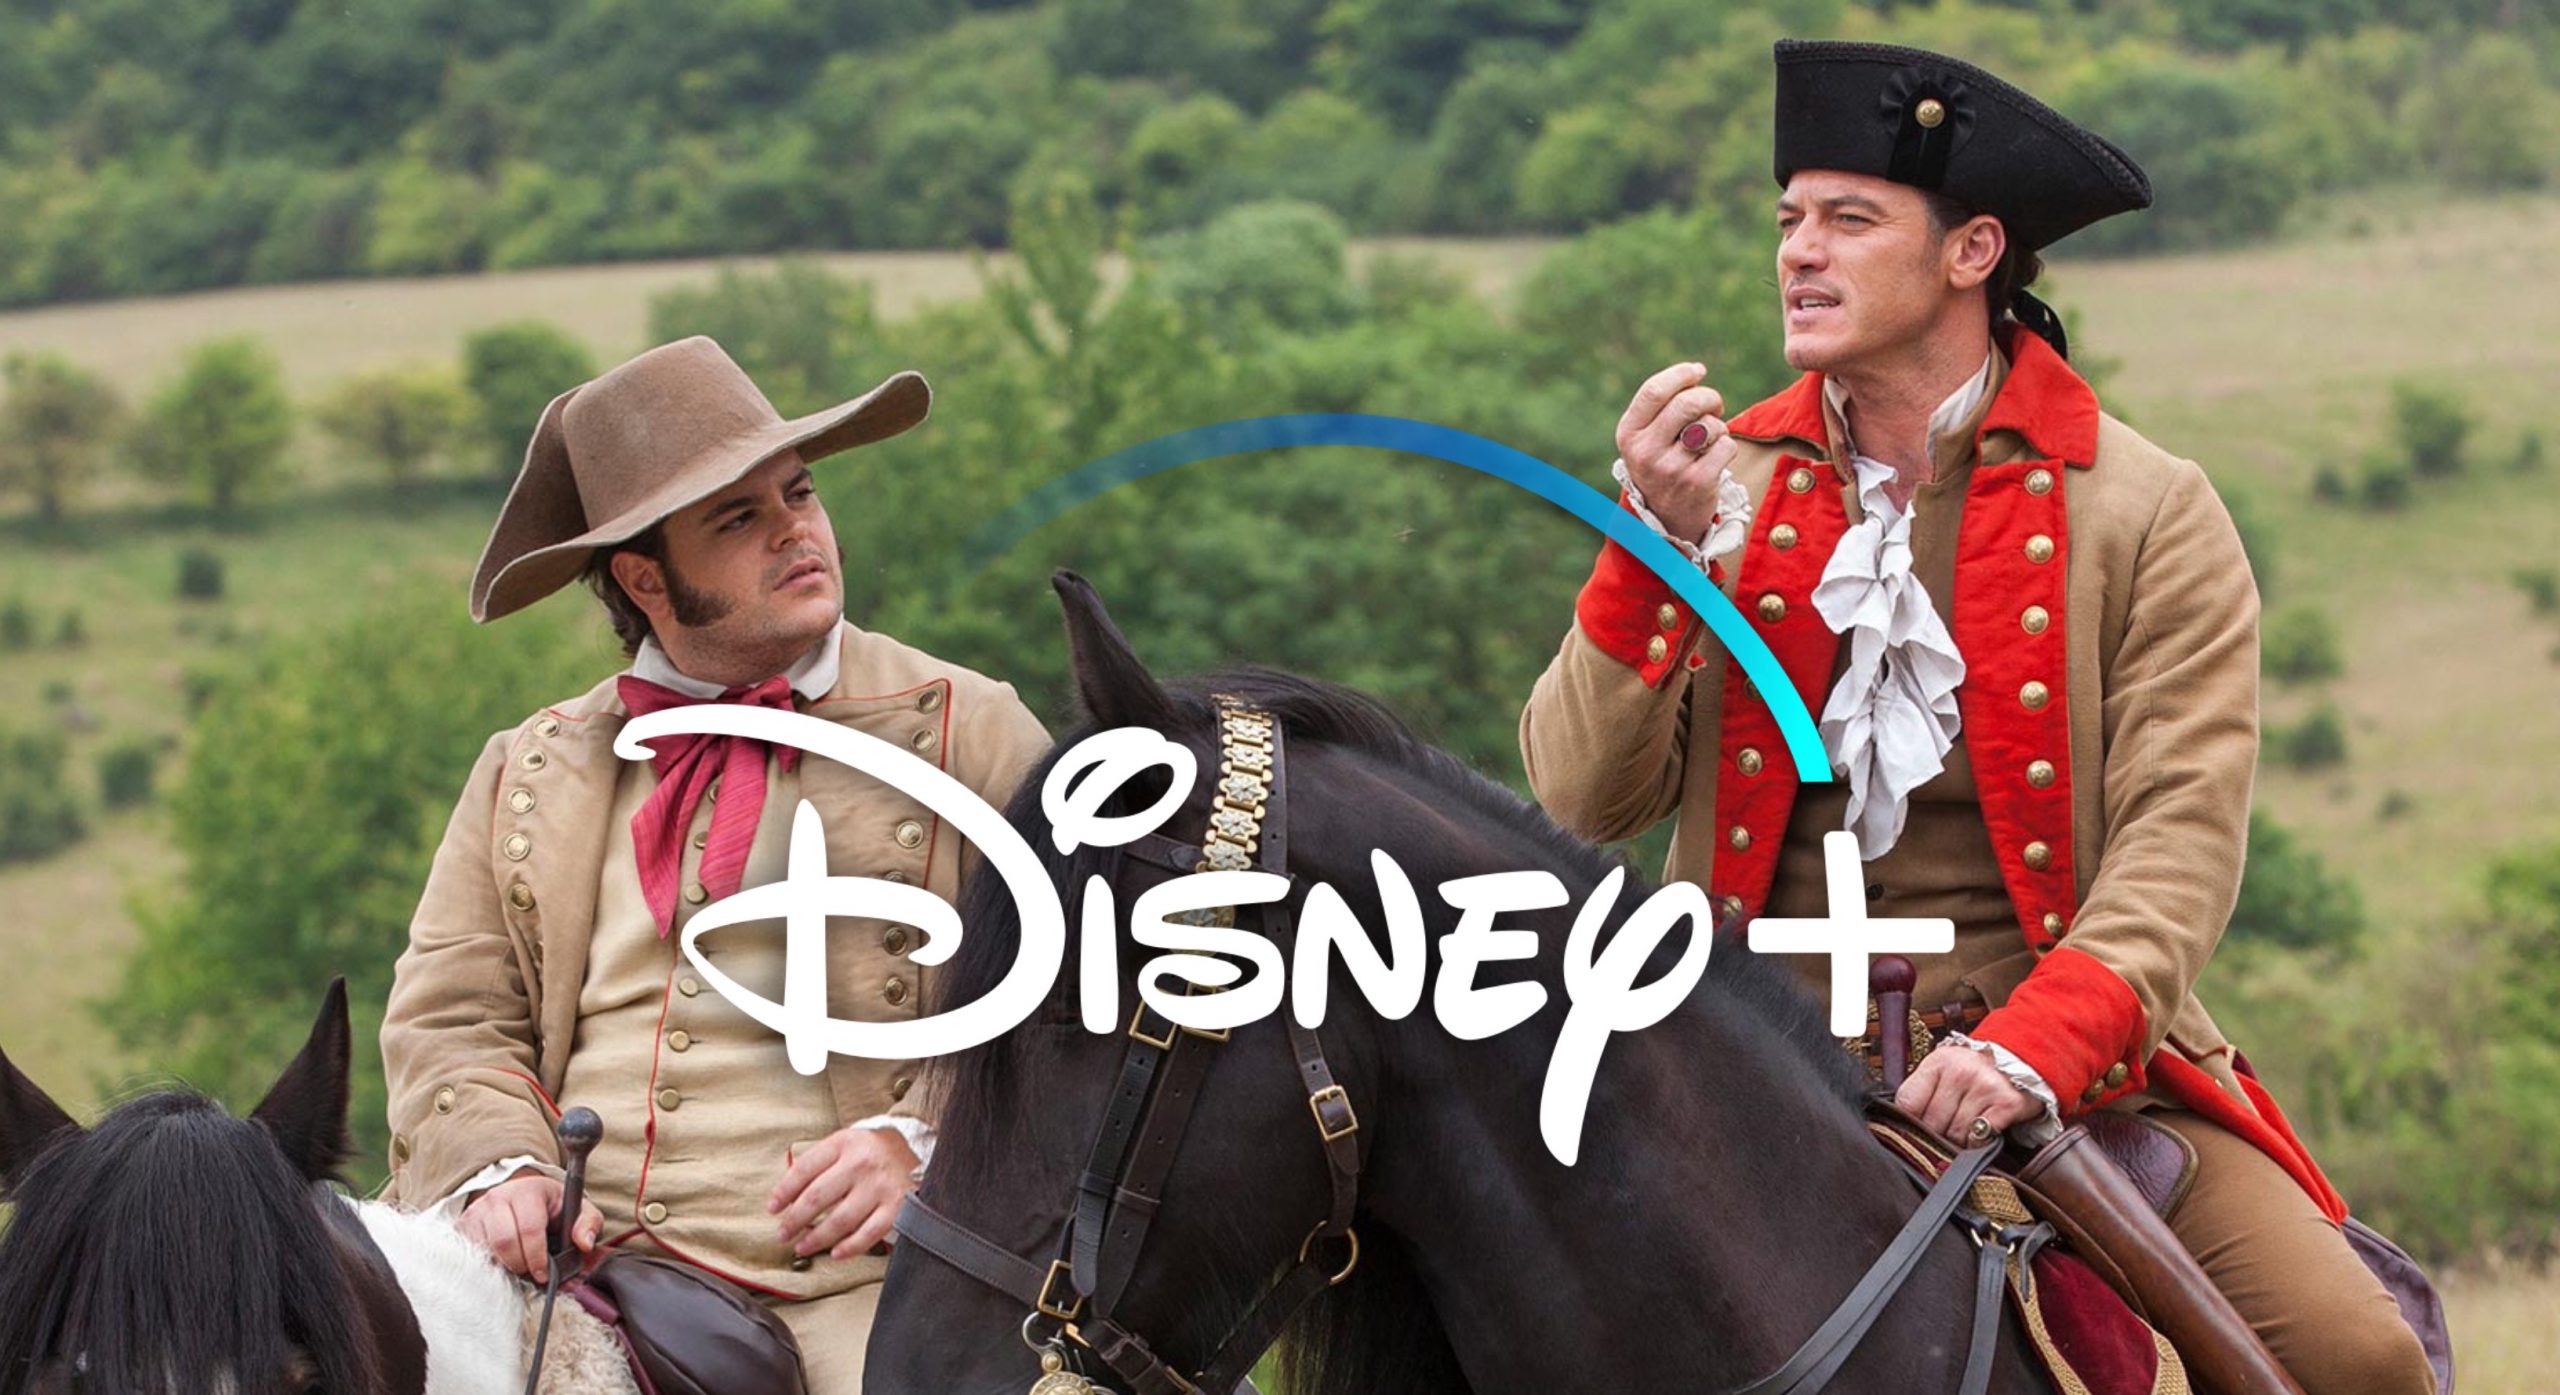 Luke Evans Shares Update on “Gaston and LeFou” Disney+ Series